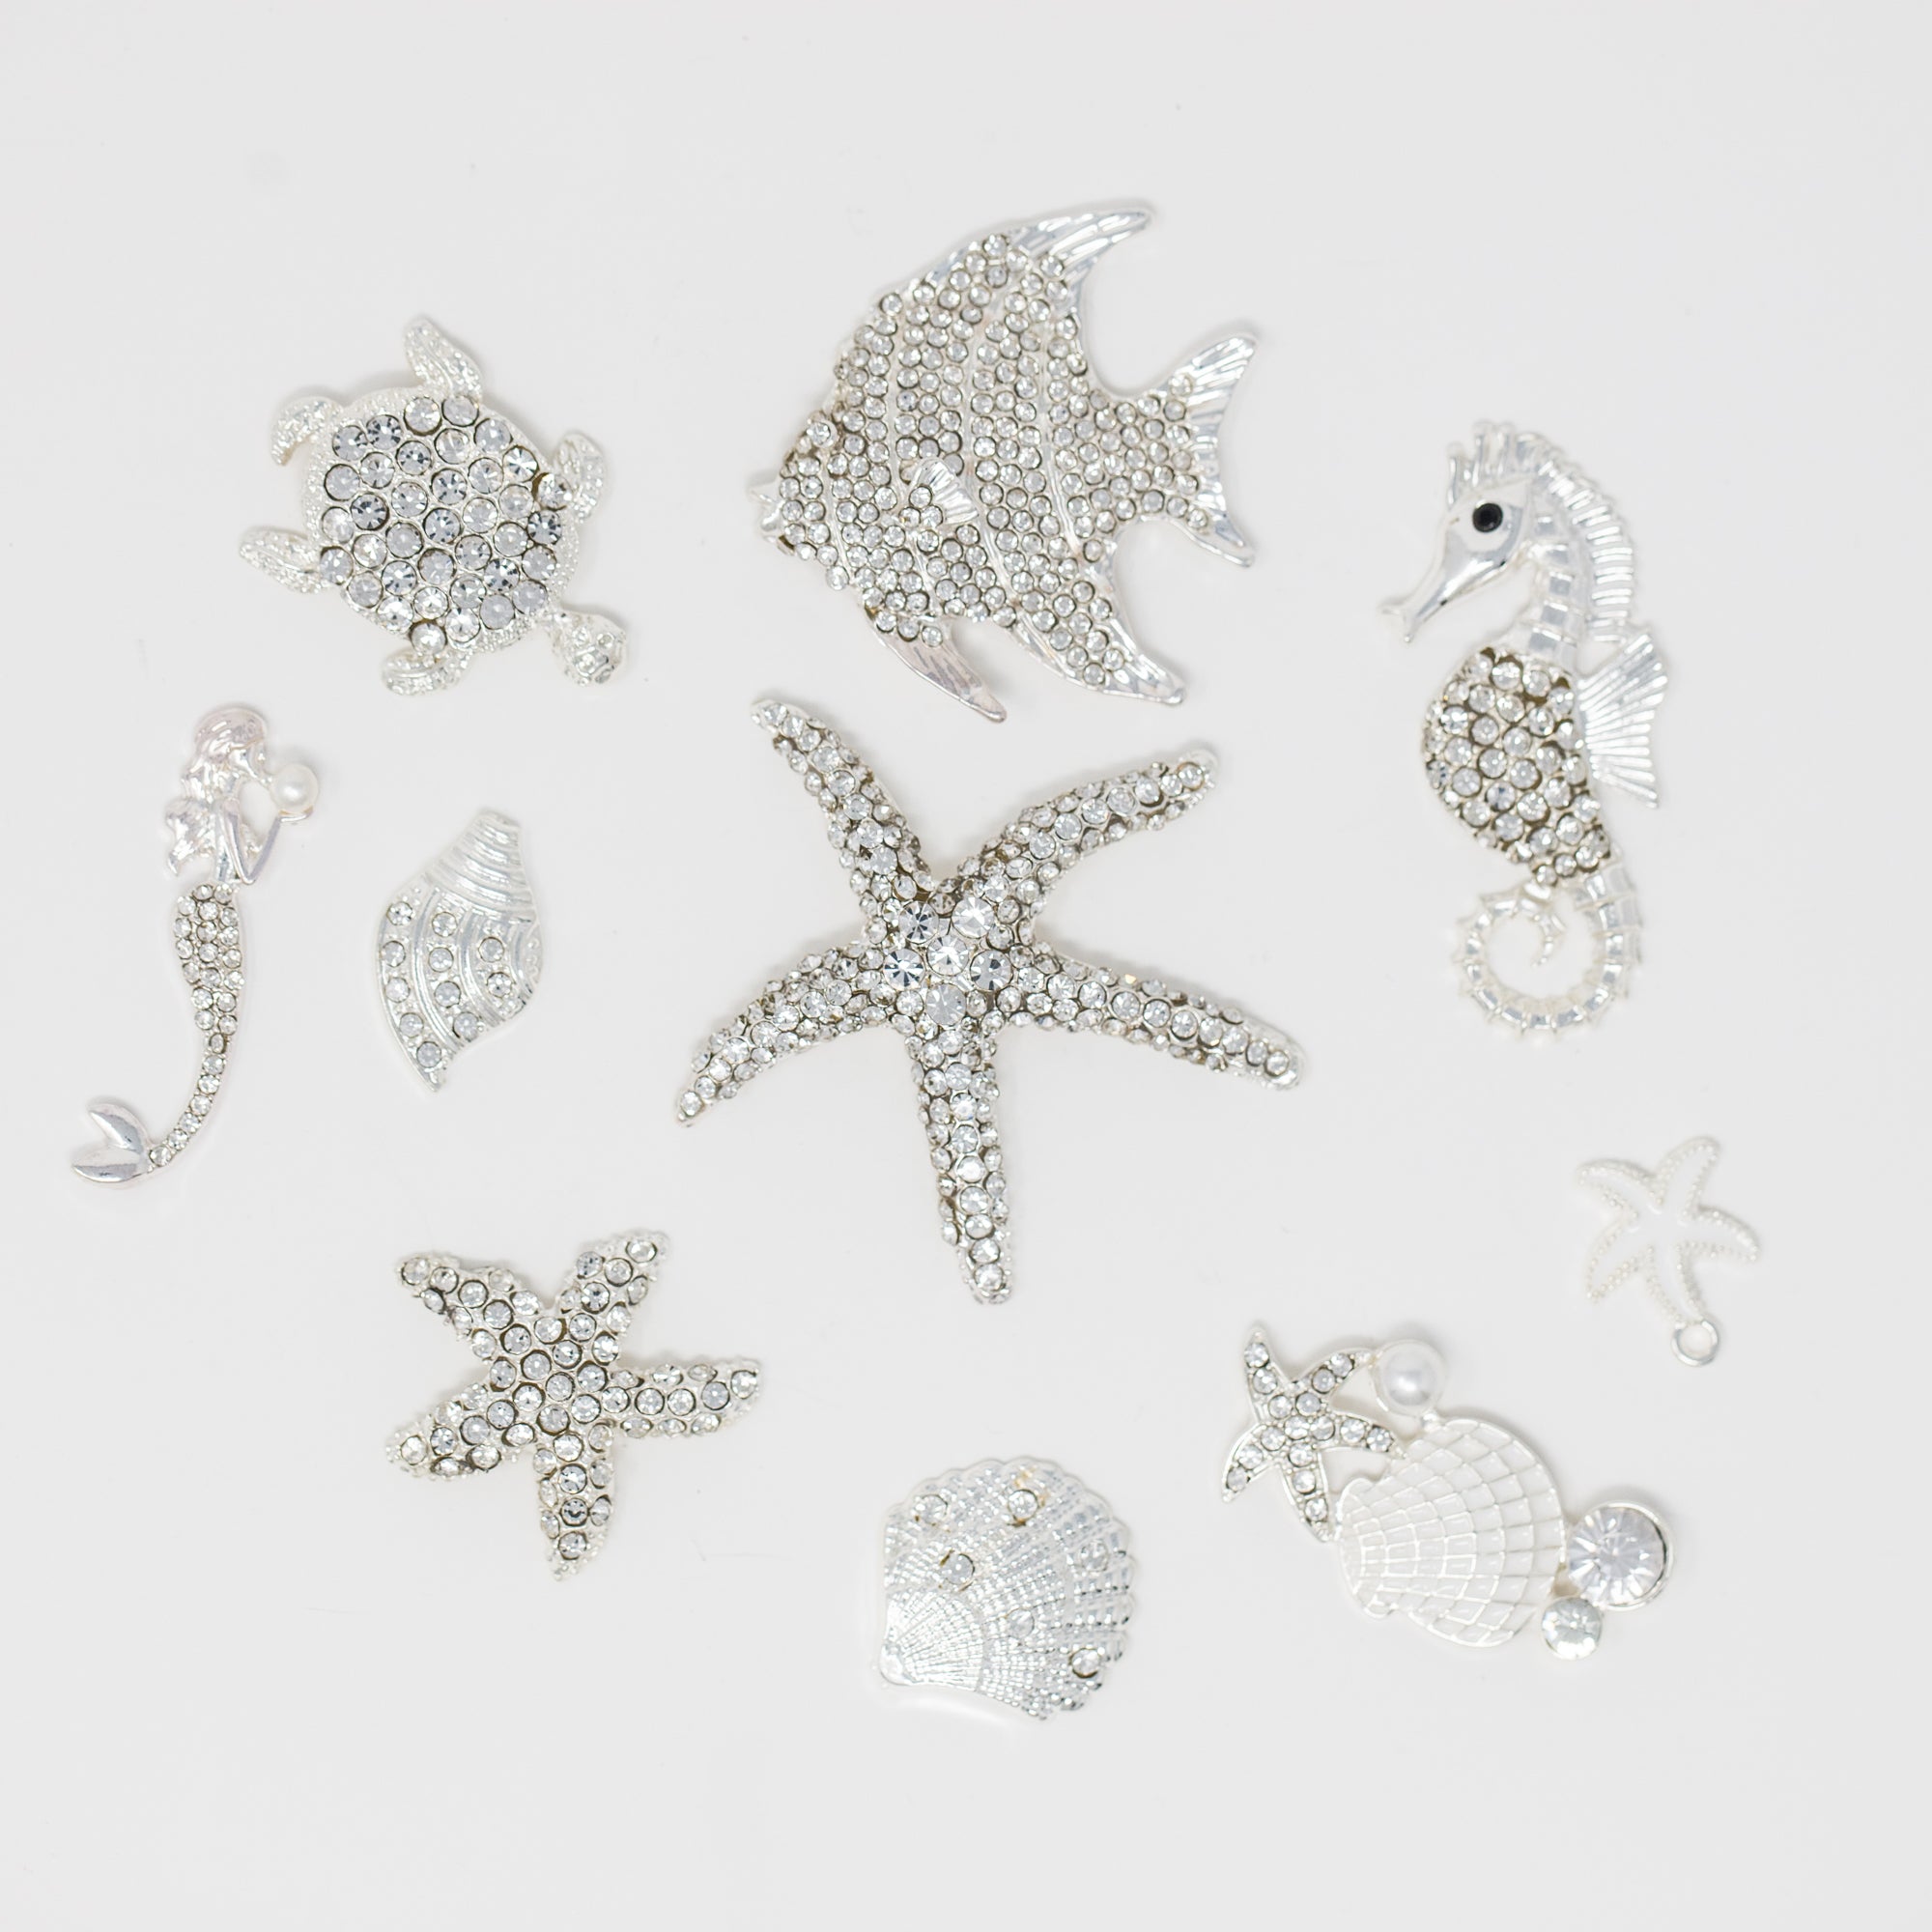 Coastal Beach Rhinestone Embellishments for crafts weddings and DIY rhinestone crystal sea horse starfish mermaid seashells fish turtle